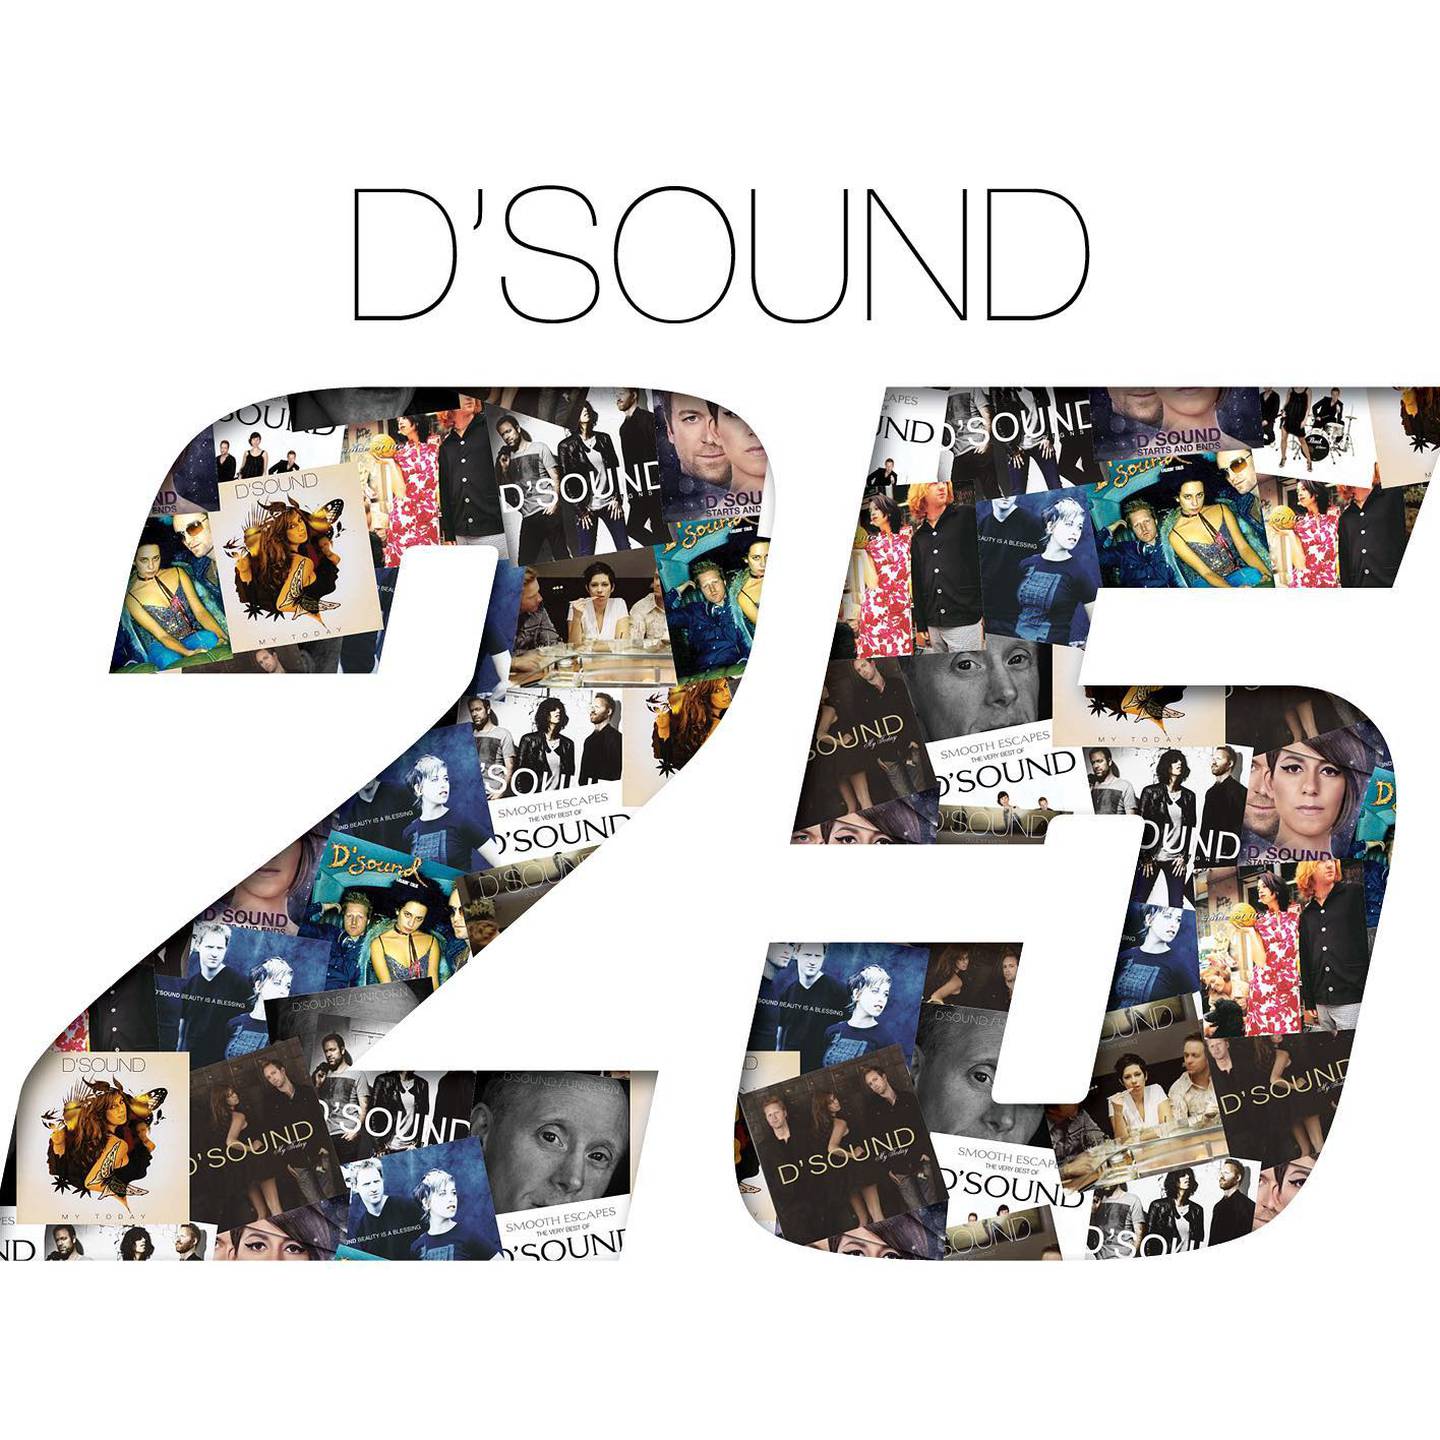 D'Sound: 25